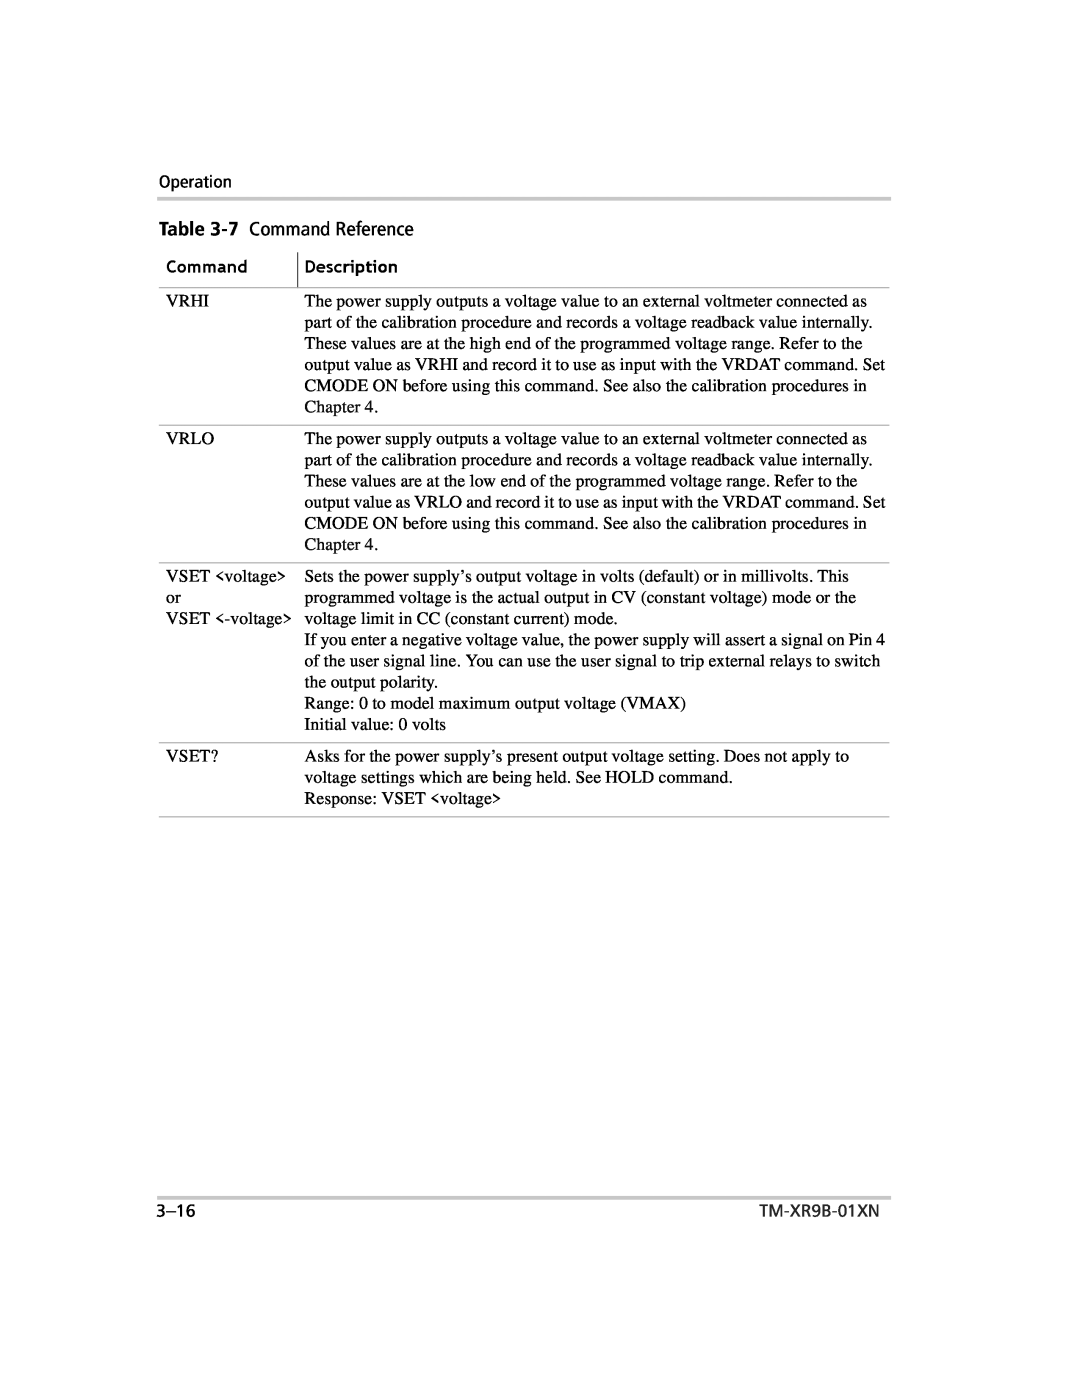 Xantrex Technology ENET-XFR3 manual Description, 7 Command Reference, TM-XR9B-01XN 